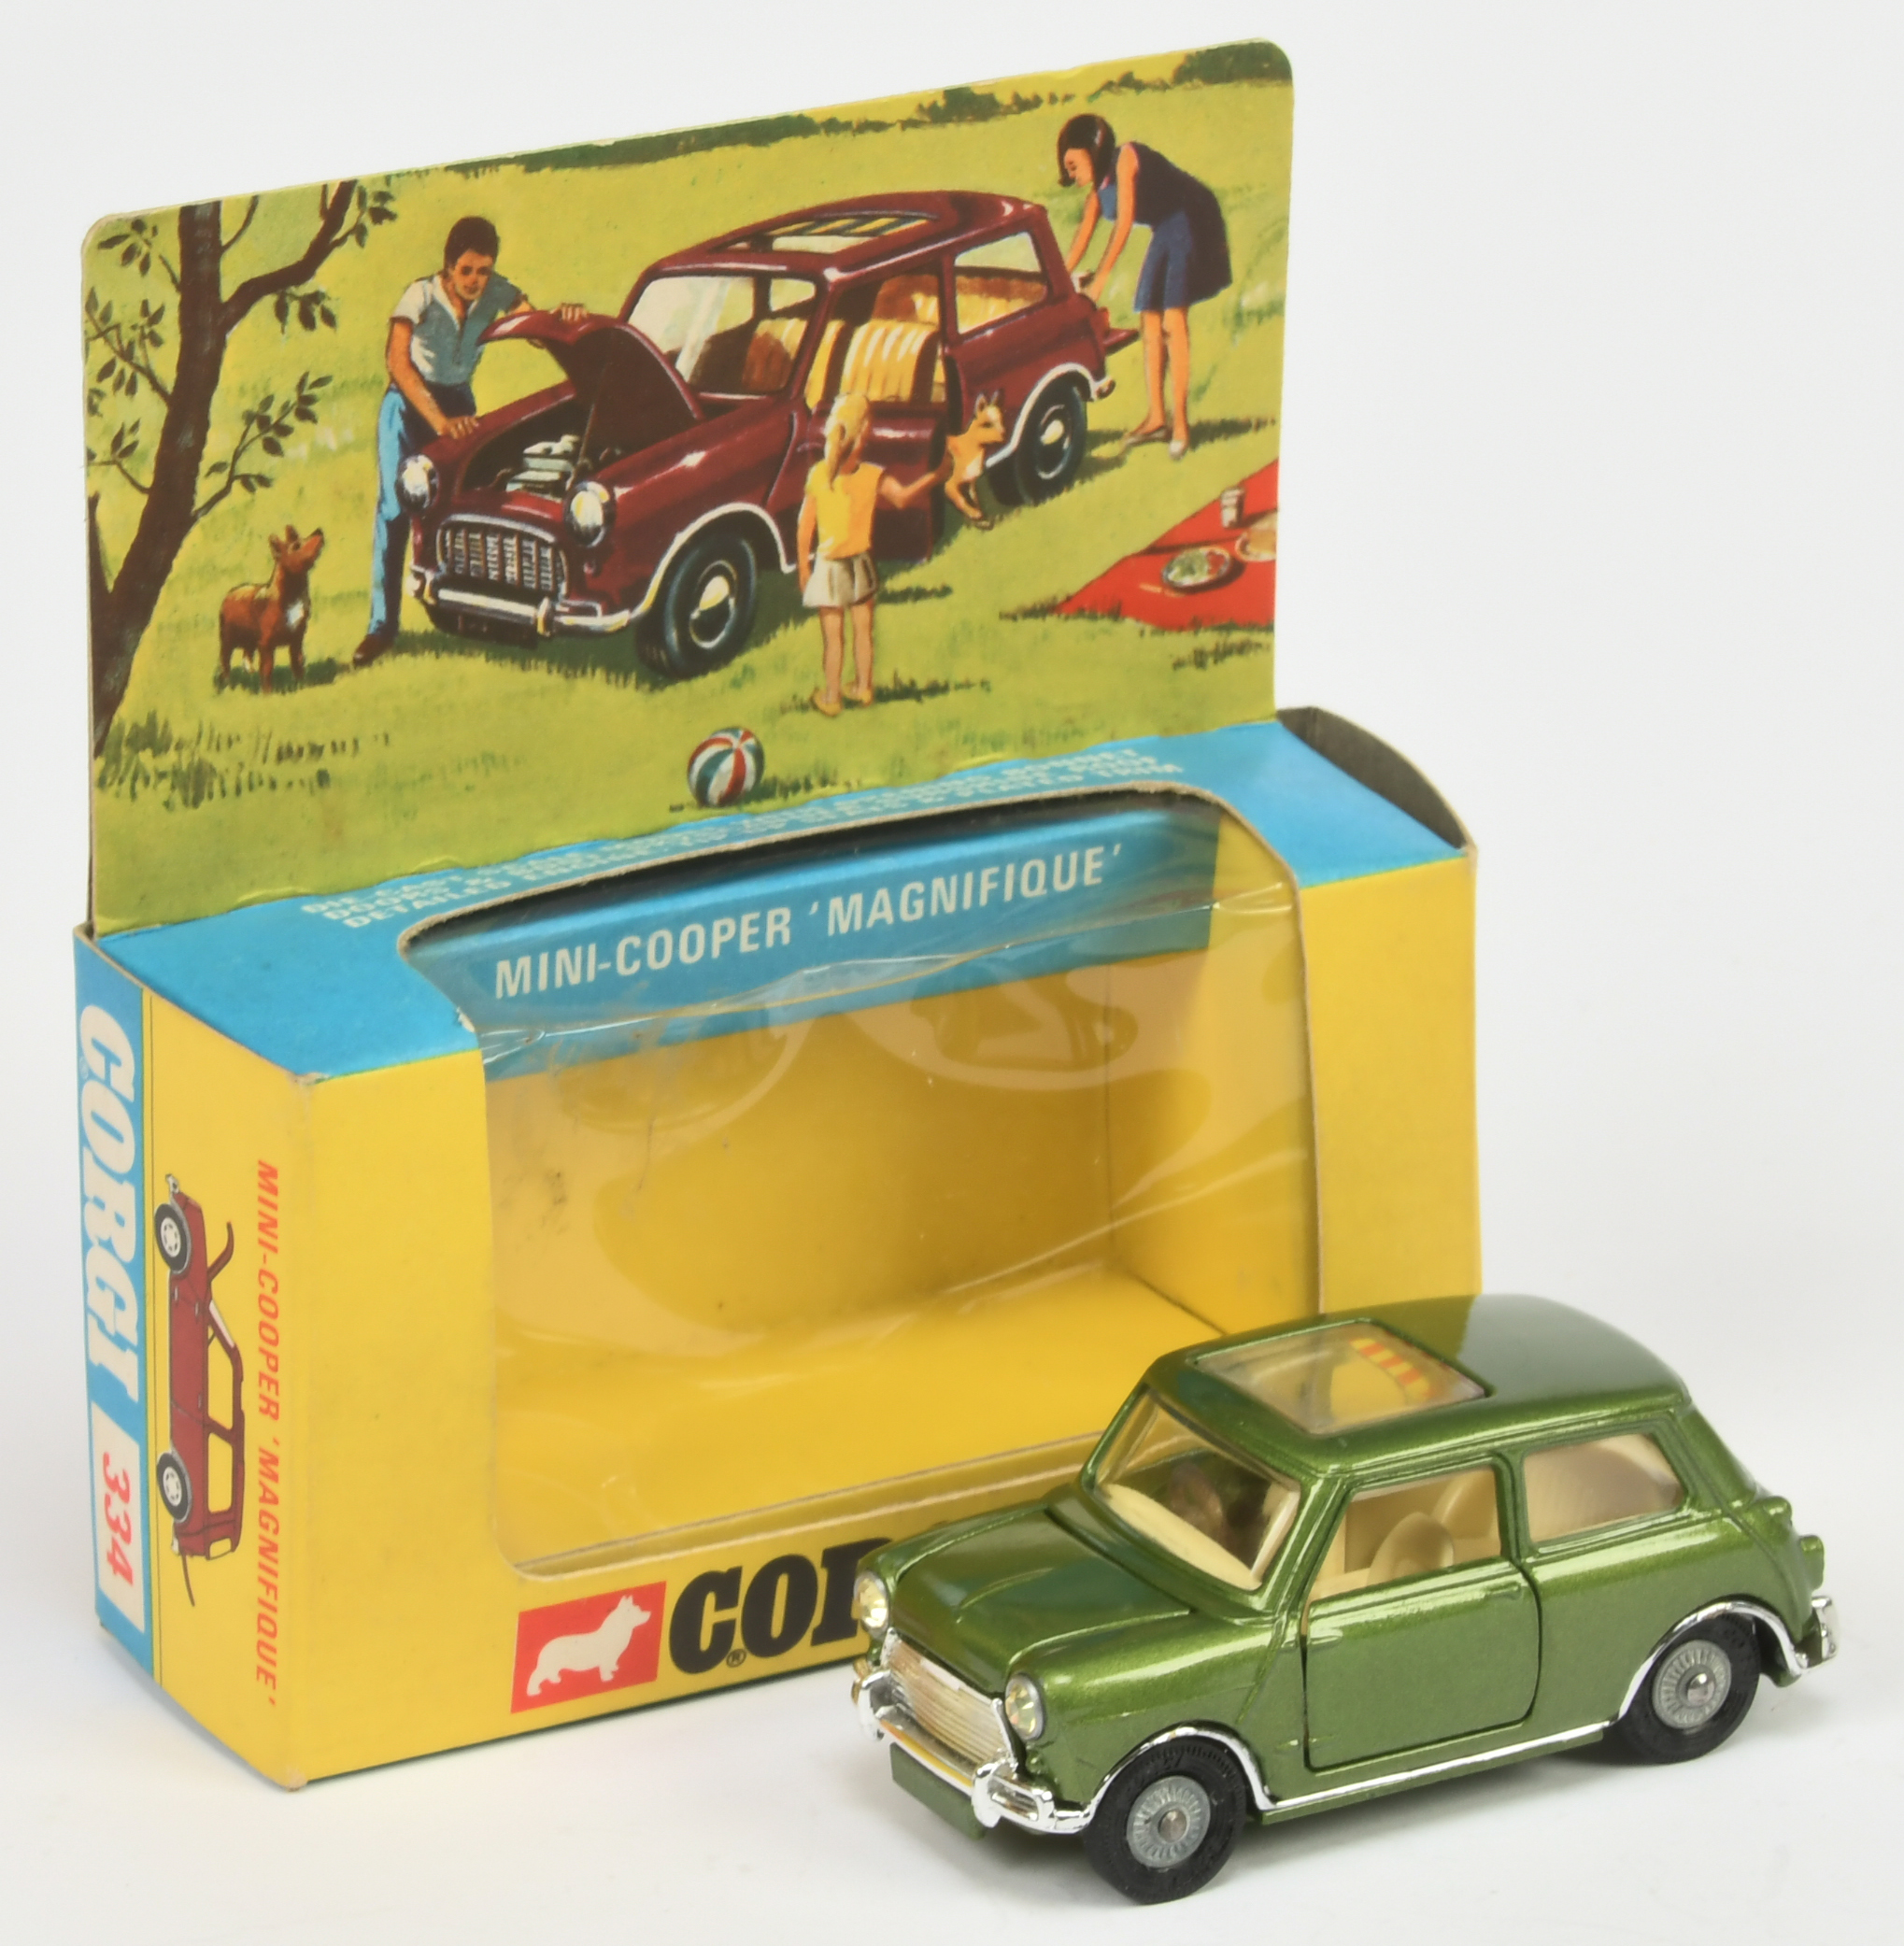 Corgi Toys 334 BMC Mini Cooper S "Magnifique" - Green body, cream interior, chrome trim, with wor...